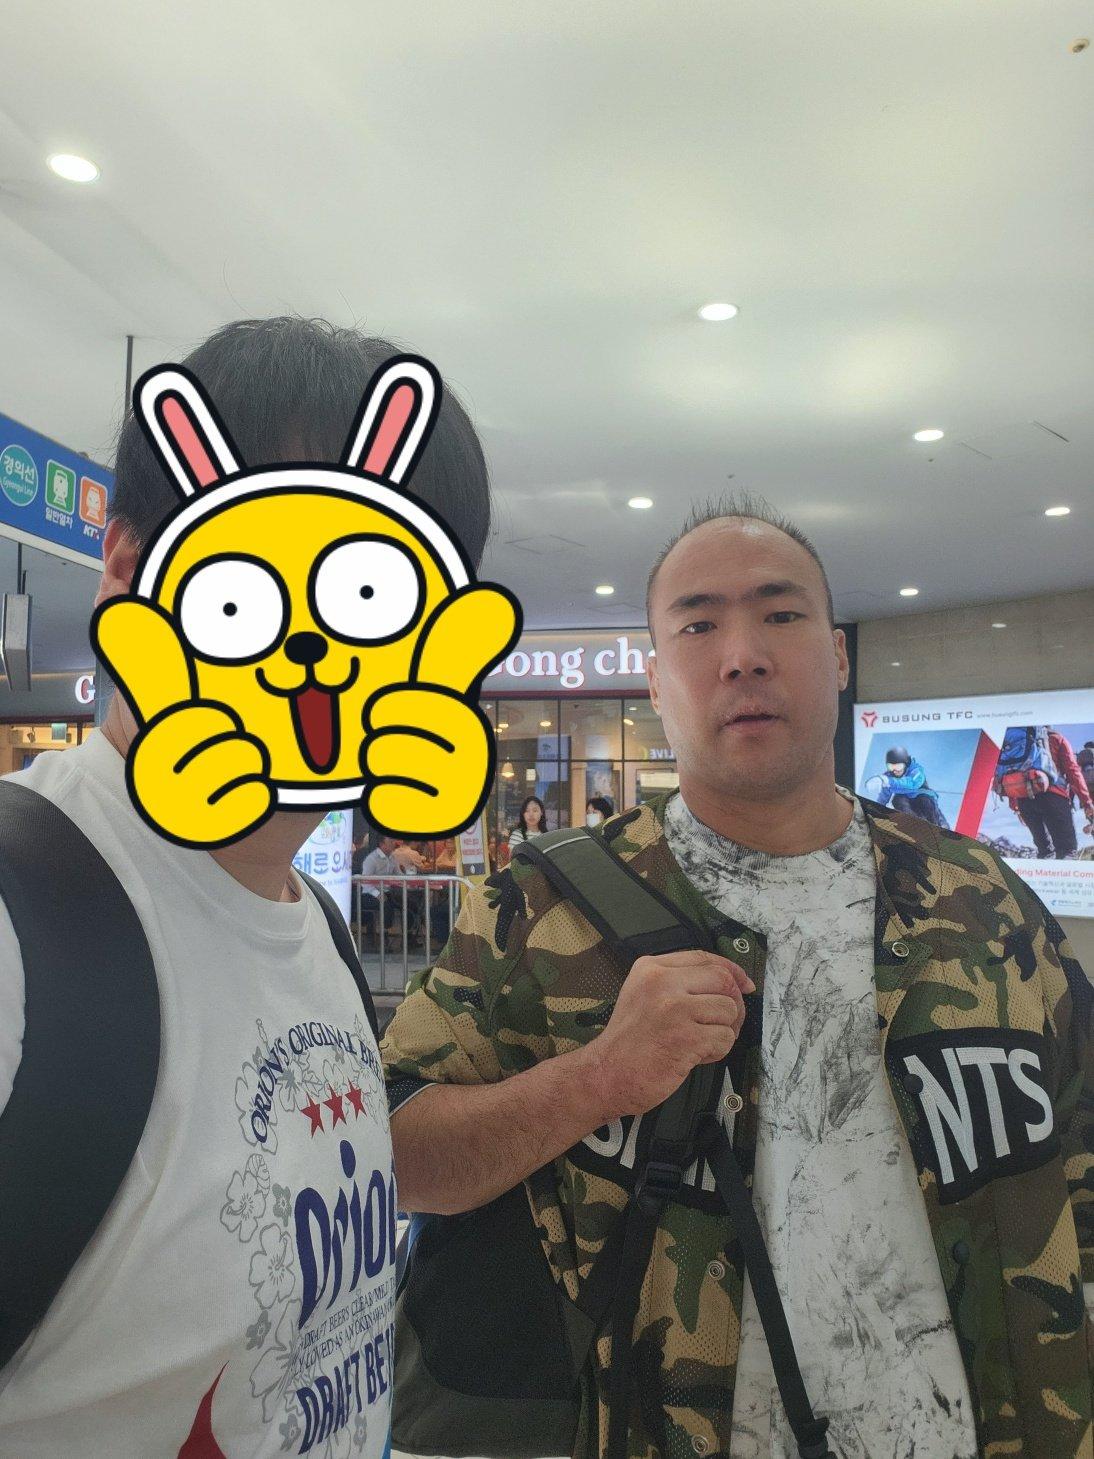 I met Sangsu at Seoul Station